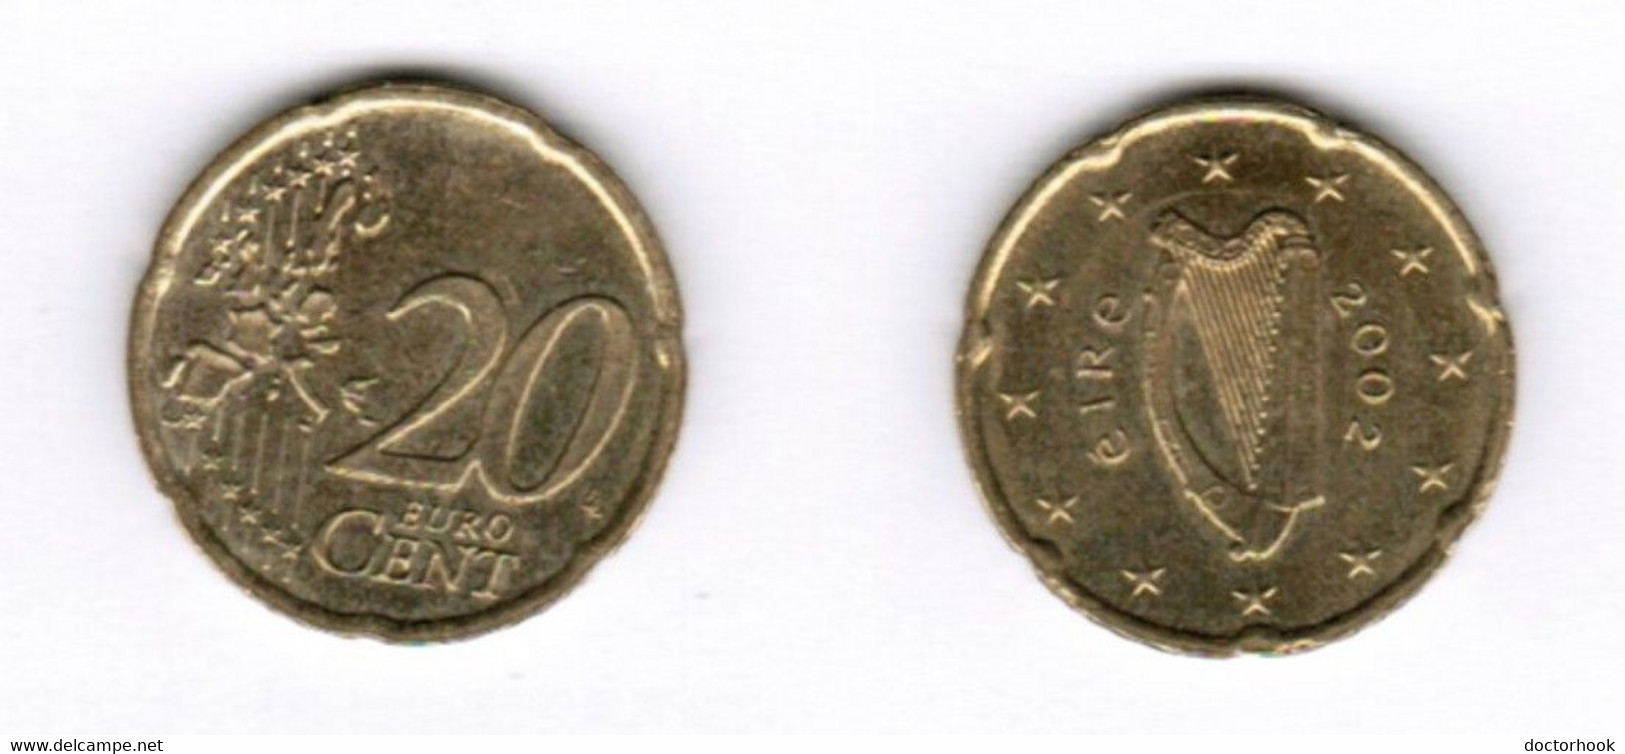 IRELAND   20 EURO CENTS 2002 (KM # 36) #7049 - Irlanda